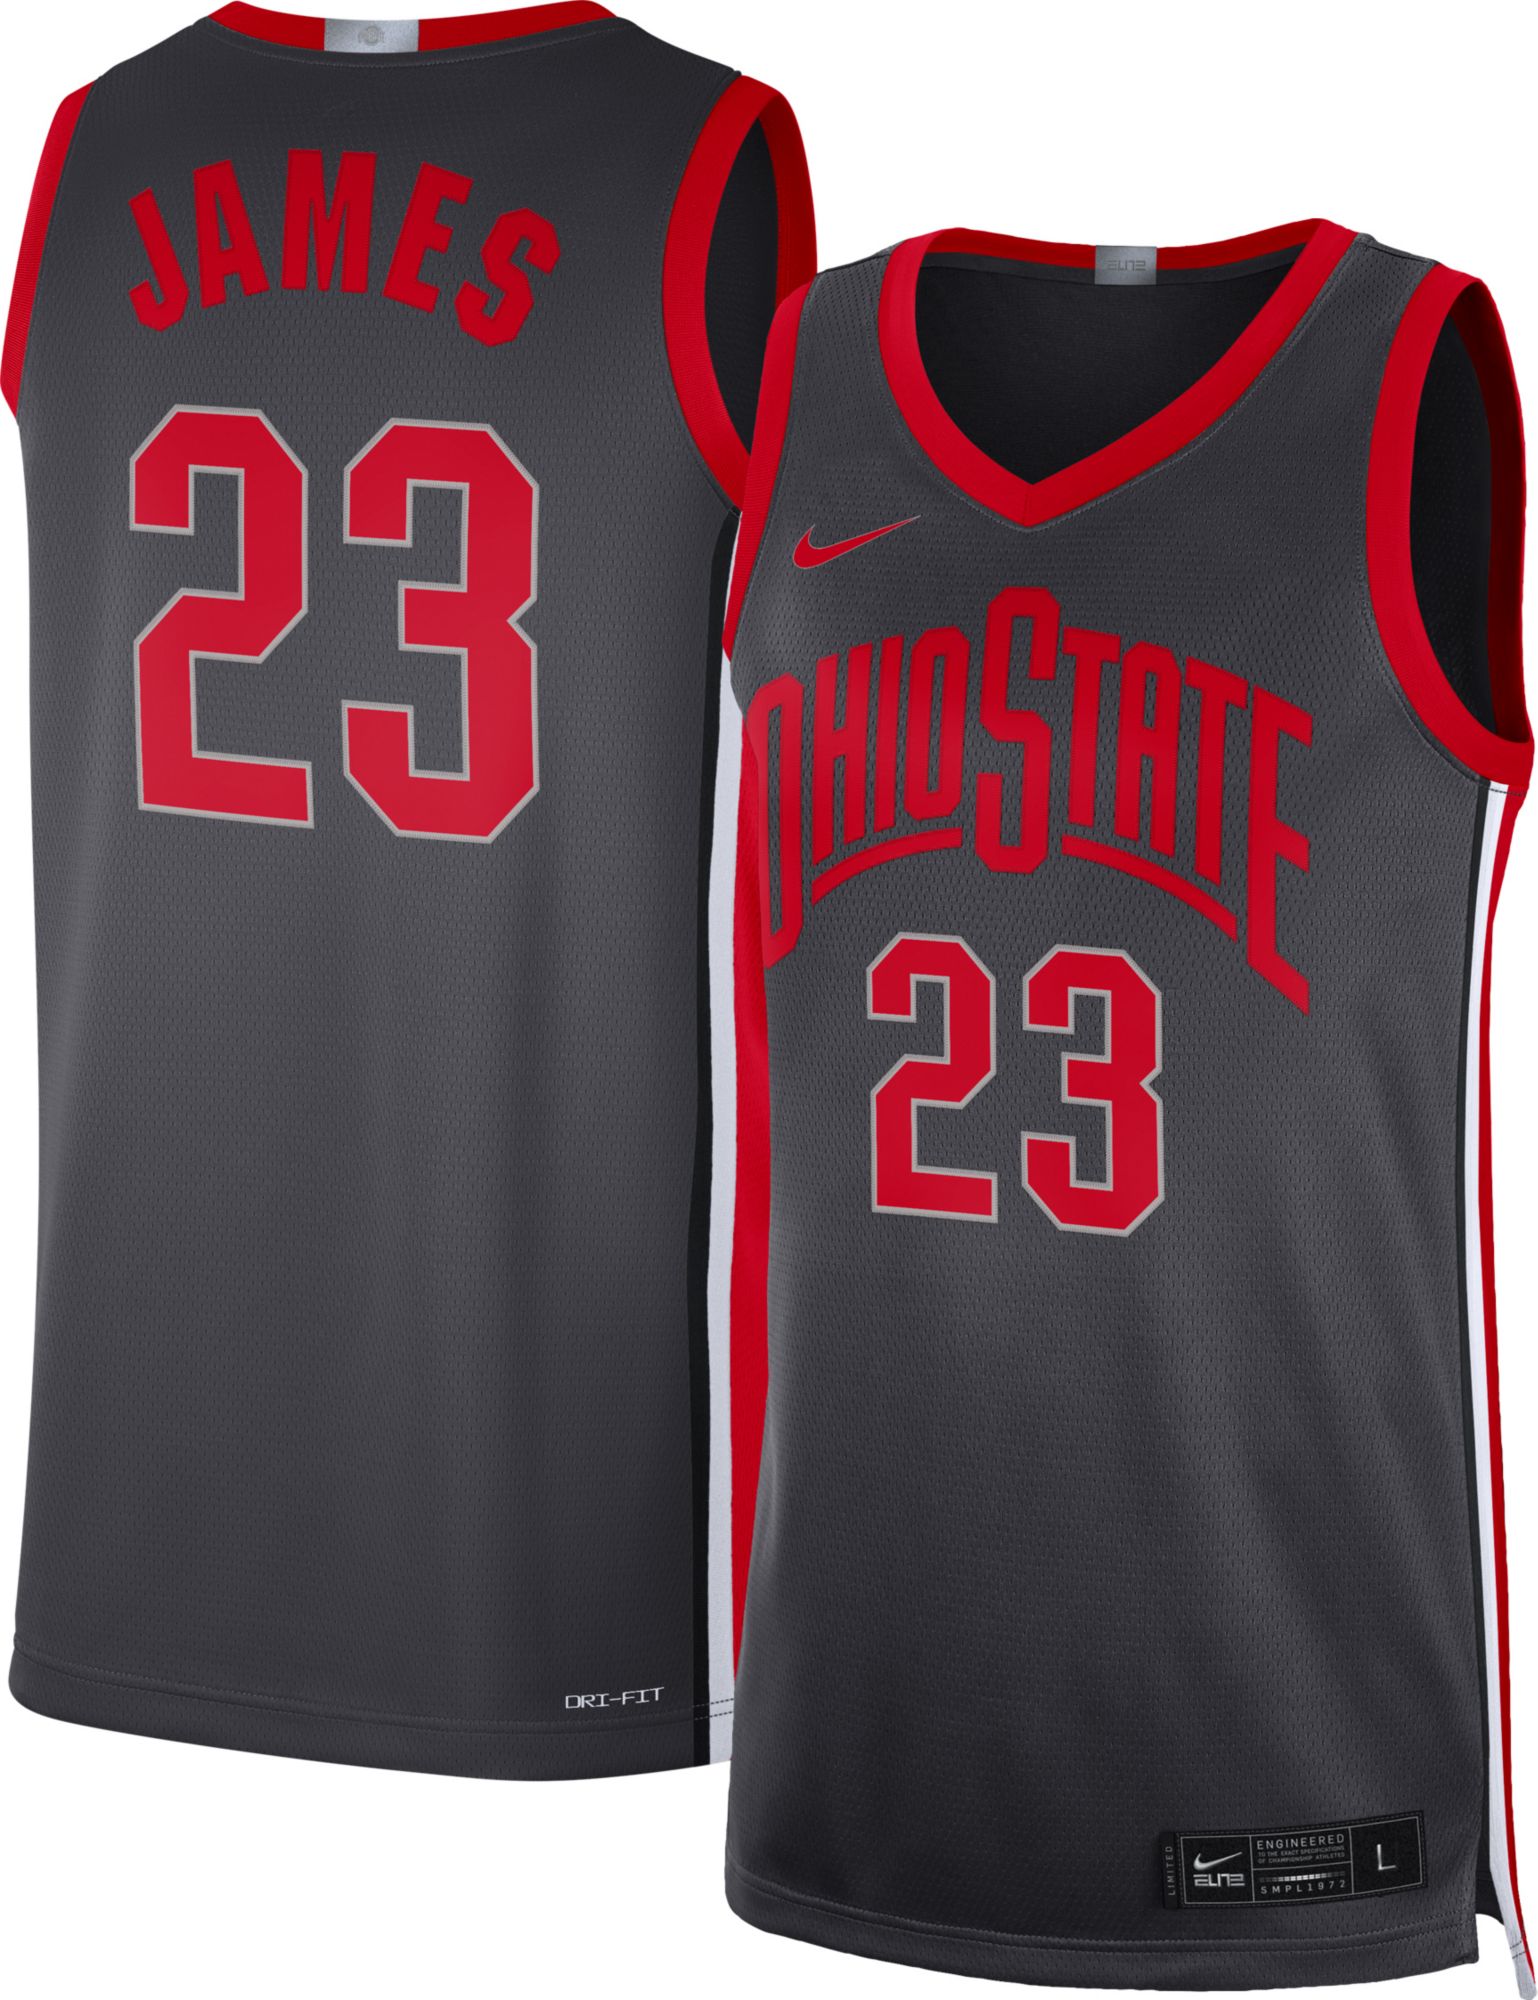 Nike / Men's Ohio State Buckeyes LeBron James #23 Gray Limited